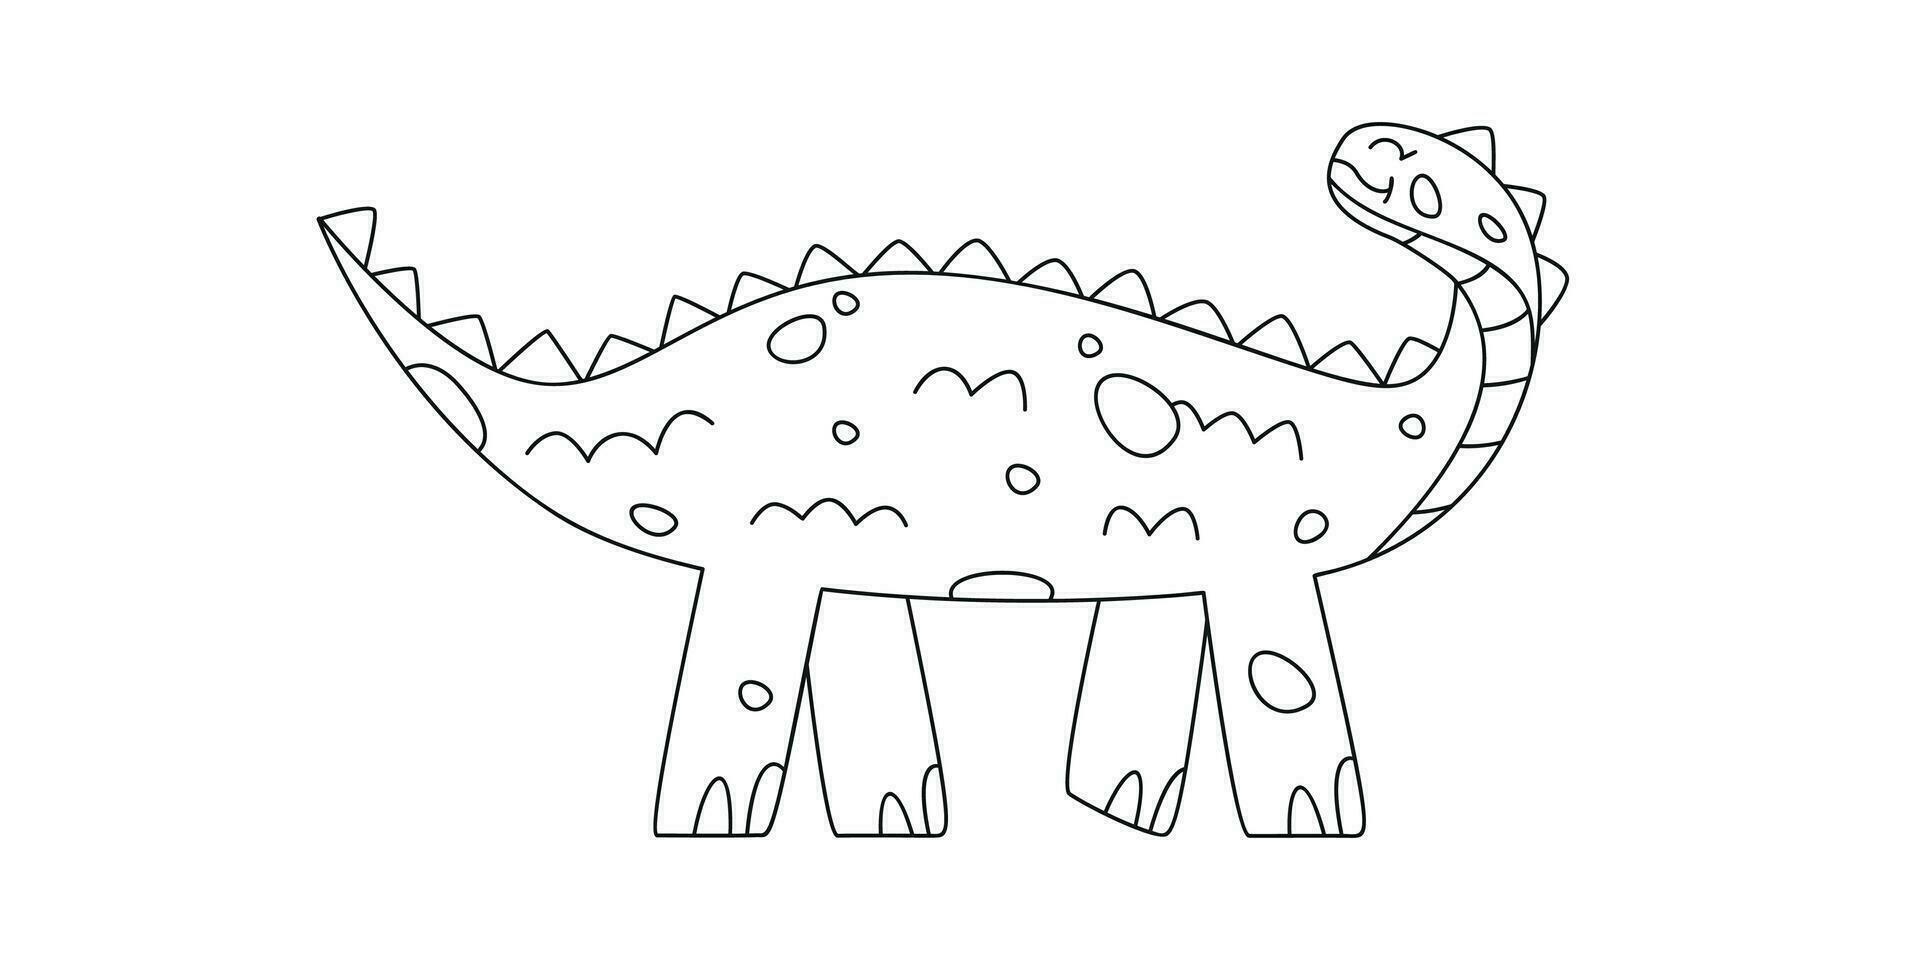 Hand drawn linear vector illustration of scelidosaurus dinosaur